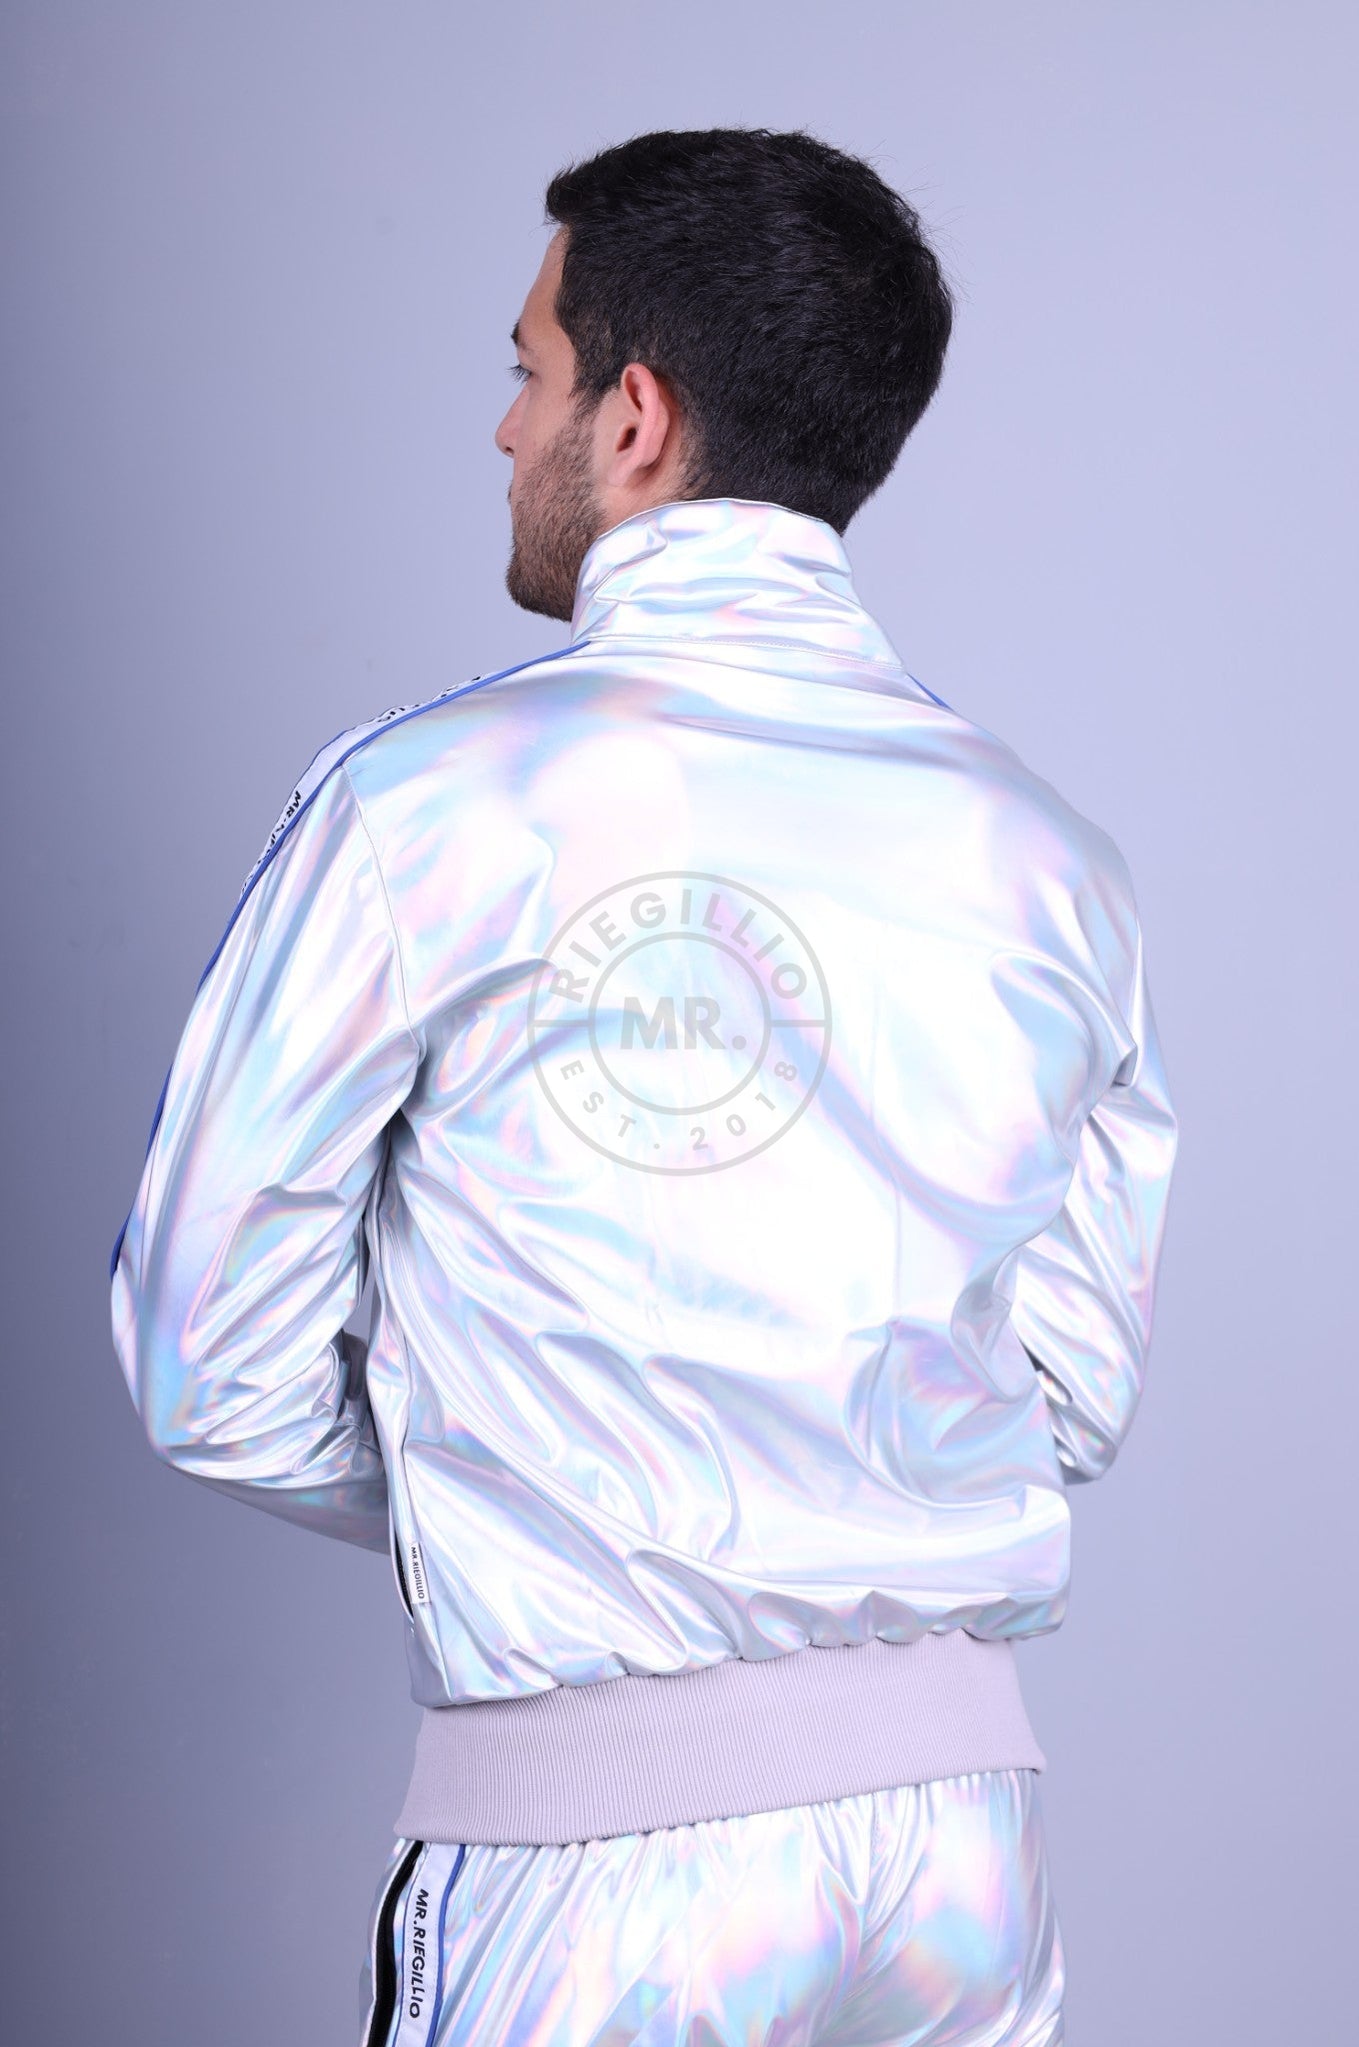 Holographic Tracksuit Jacket at MR. Riegillio